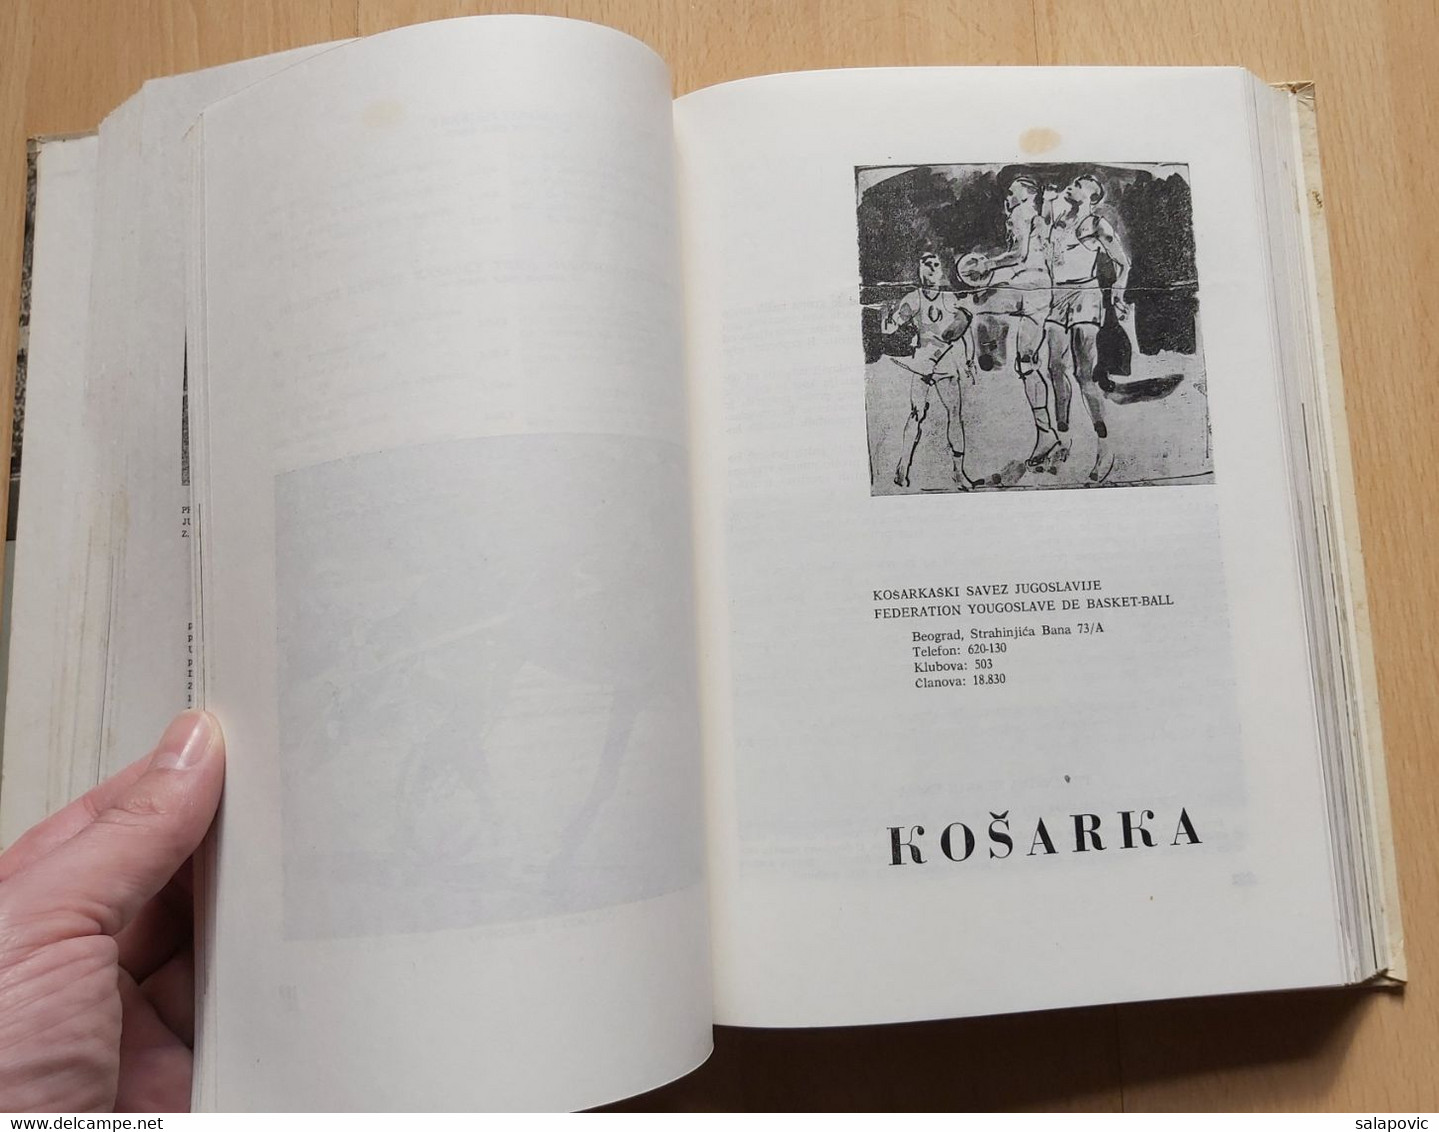 Almanah Jugoslovenskog sporta 1943 - 1963  Almanac of Yugoslav Sports